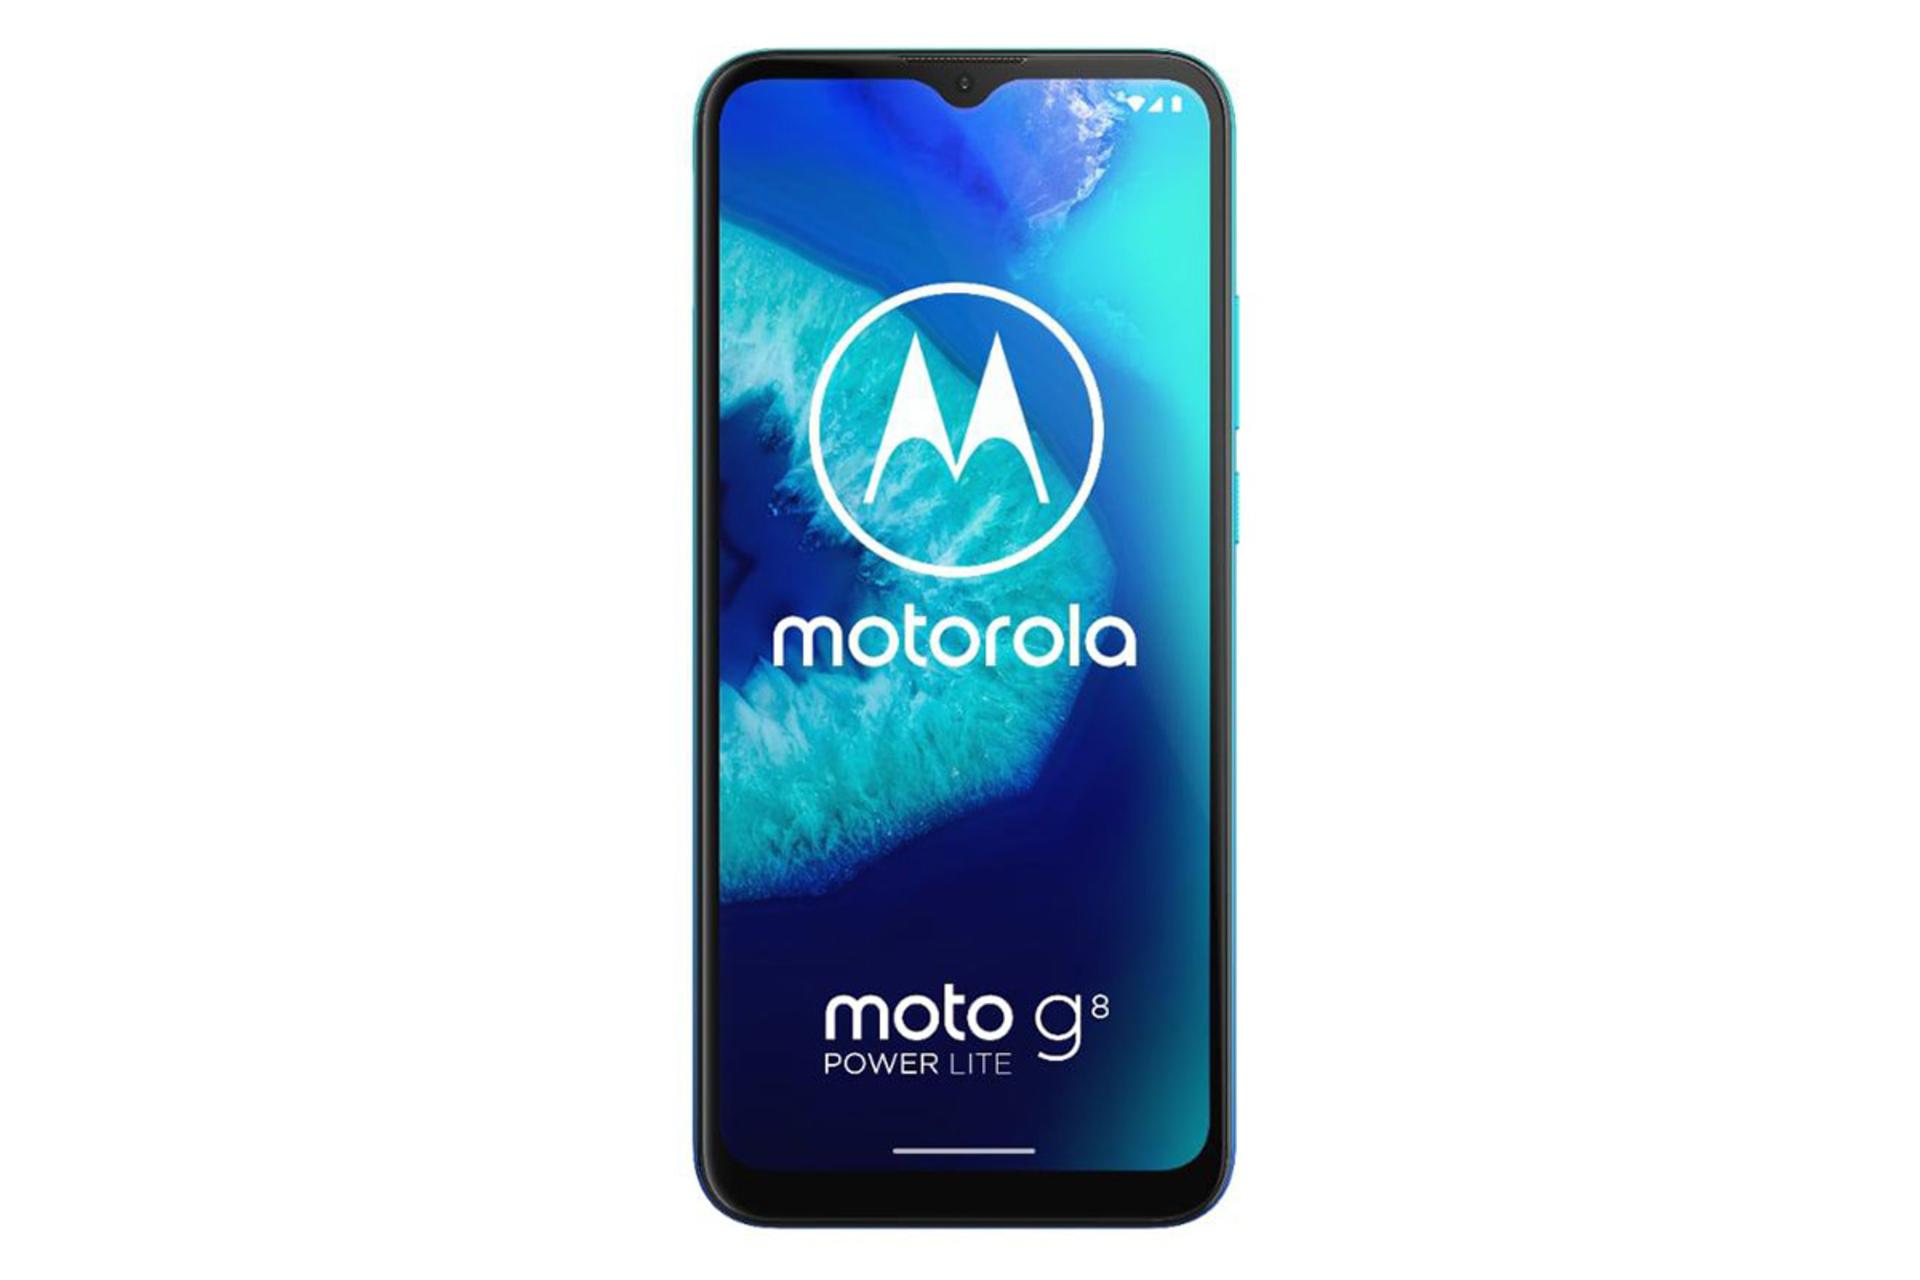 Motorola Moto G8 Power Lite / موتورولا موتو جی 8 پاور لایت